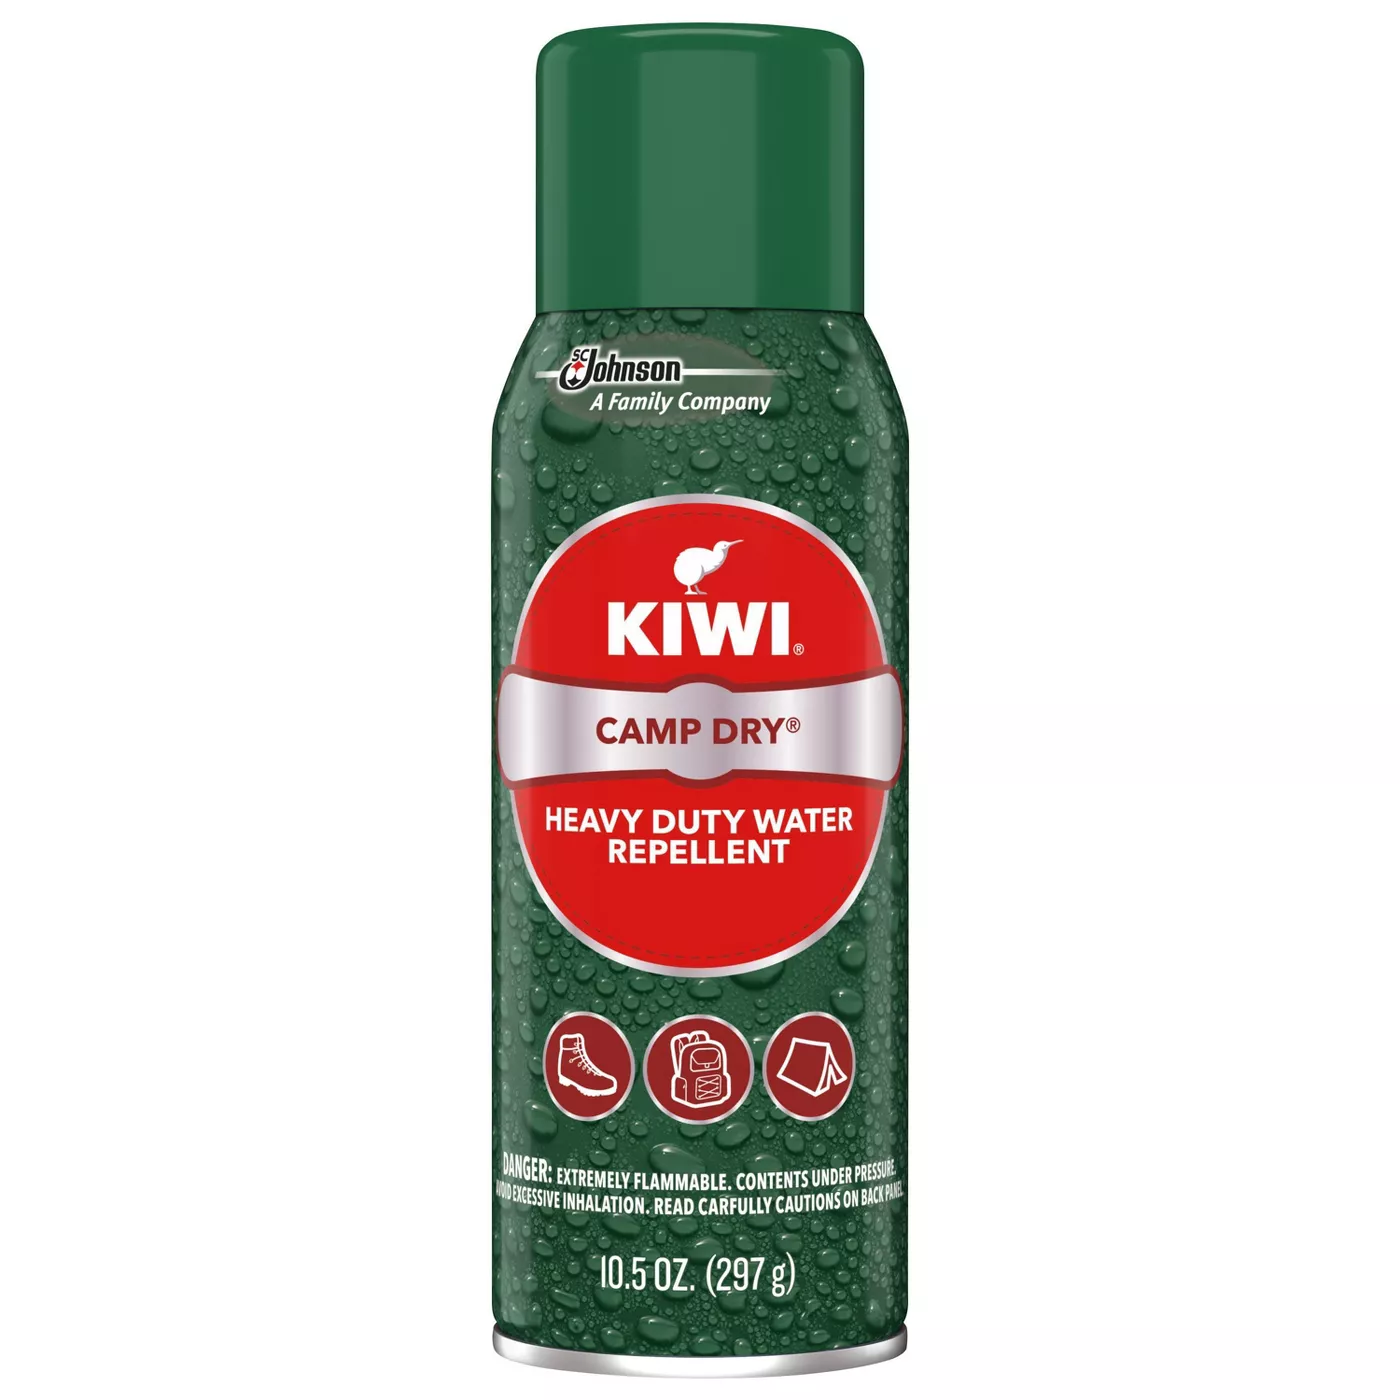 Kiwi Camp Dry® Heavy Duty Water Repellent